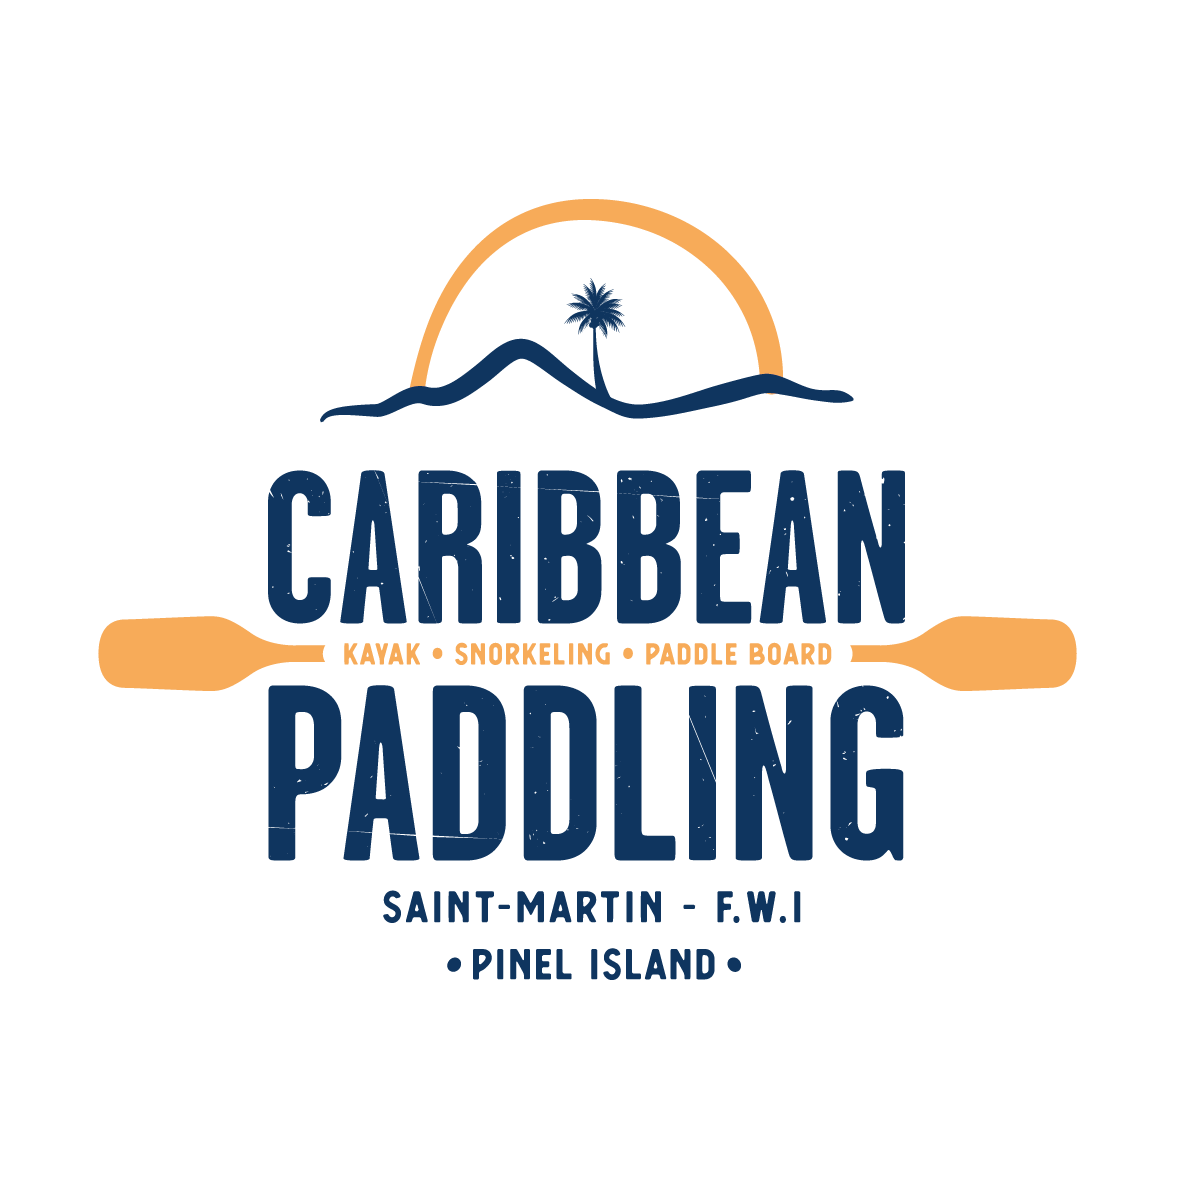 A logo for caribbean paddling kayak snorkeling paddle board saint martin f.w.i pinel island